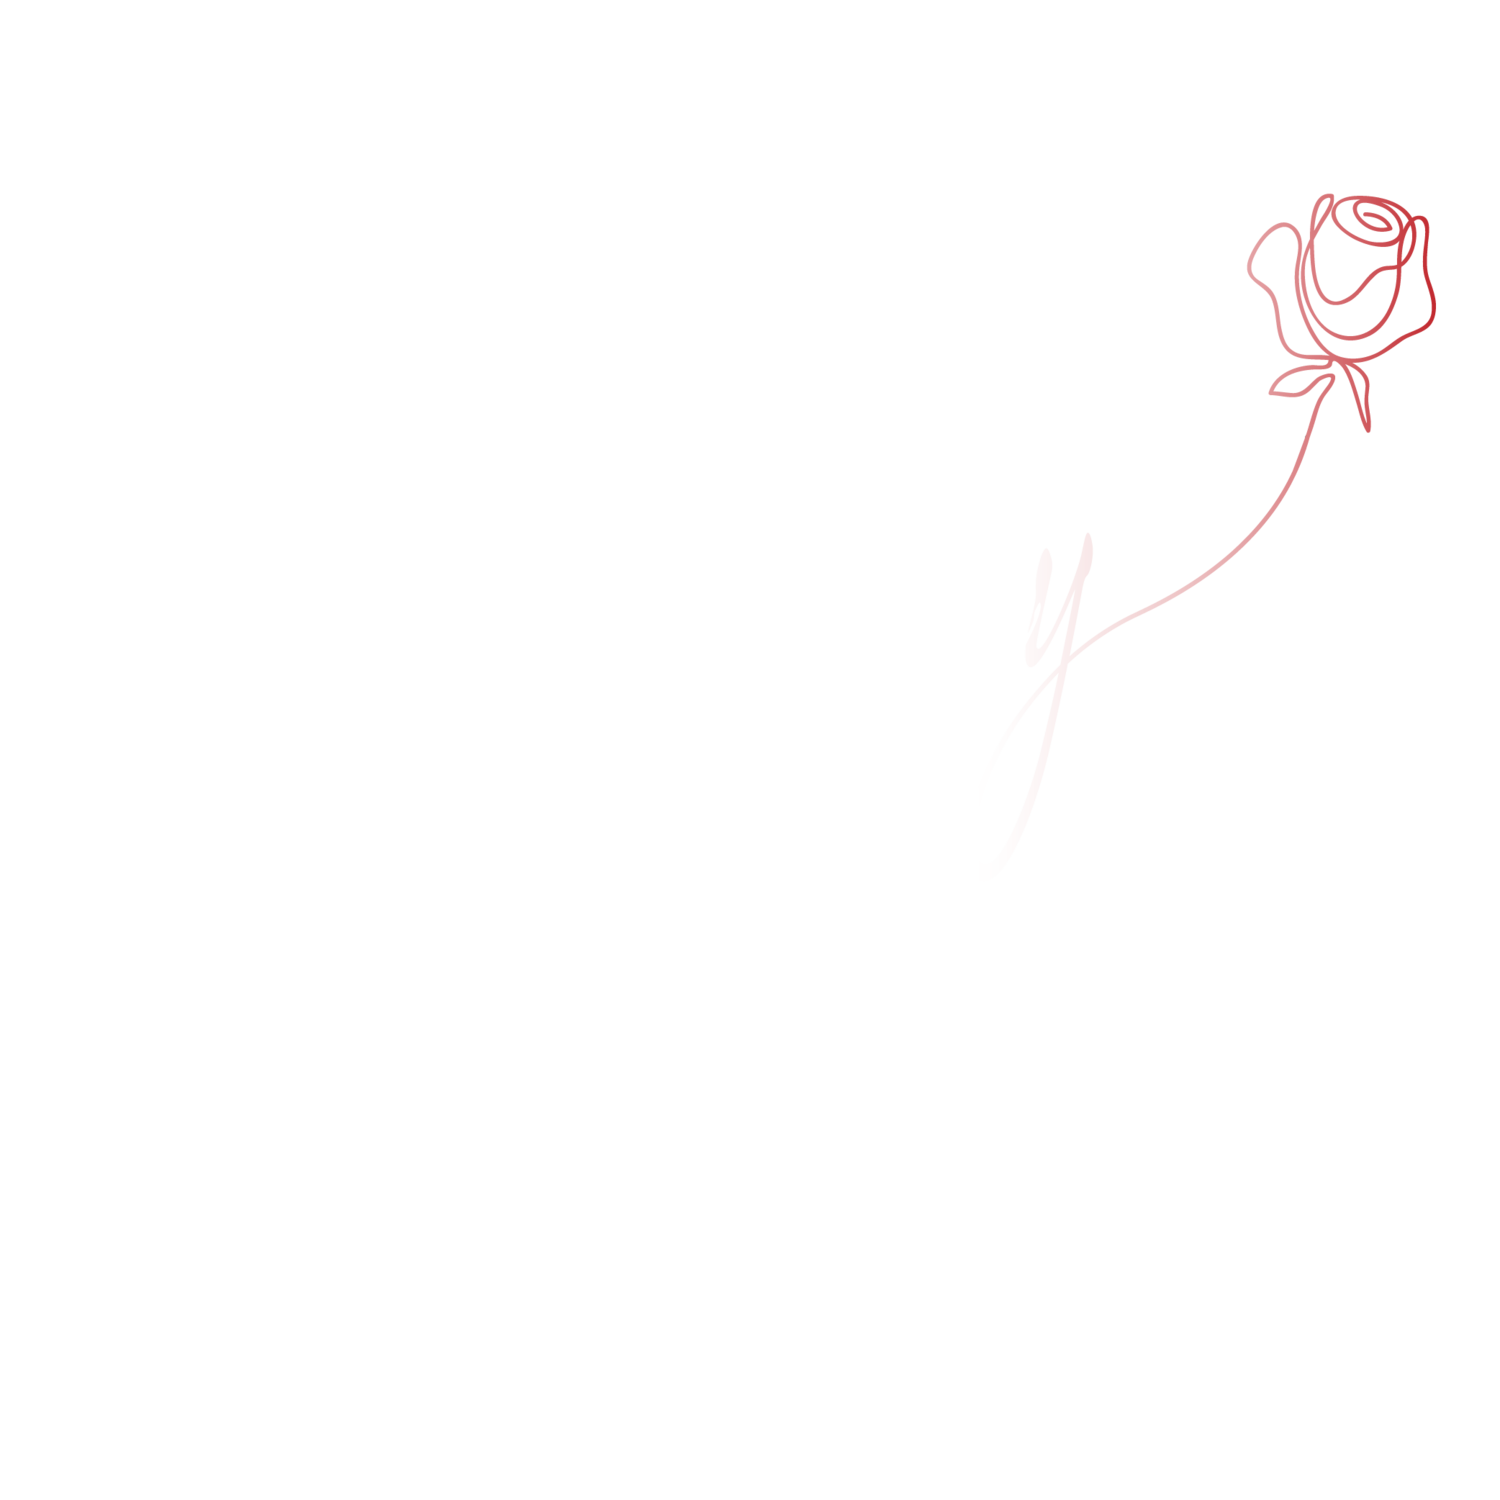 Chenay - Singer / Songwriter / Actress / Model